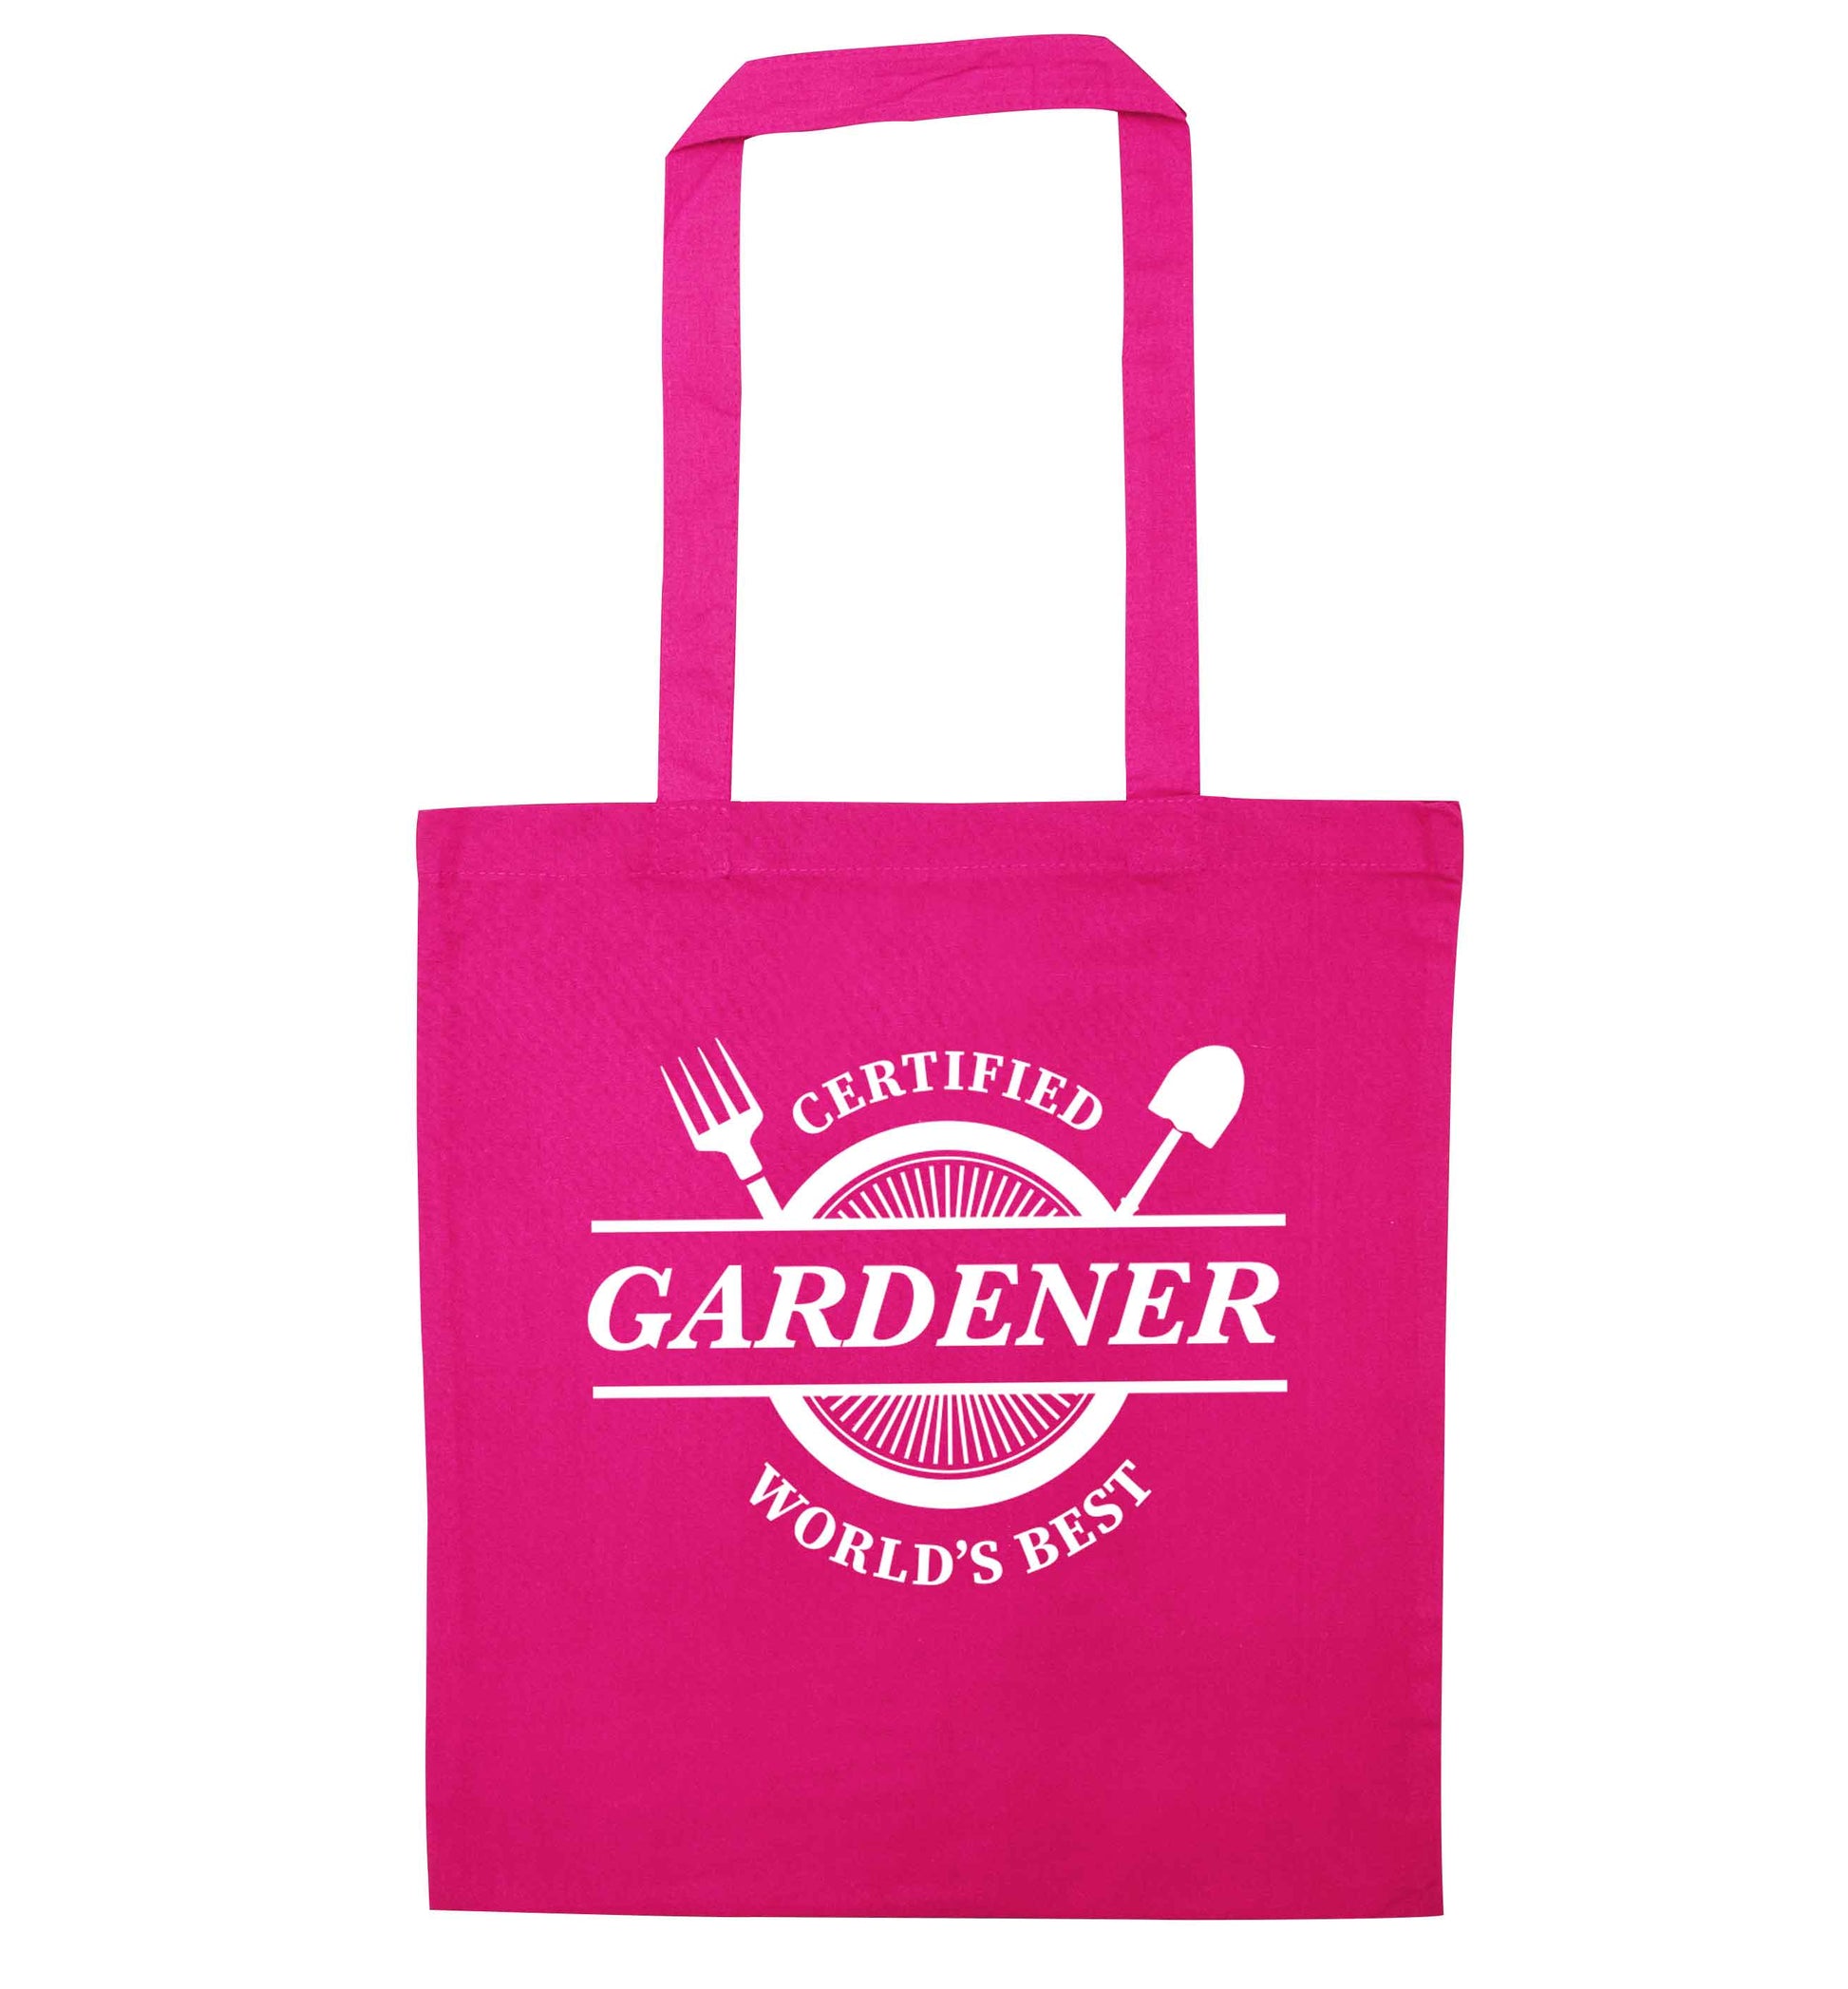 Certified gardener worlds best pink tote bag